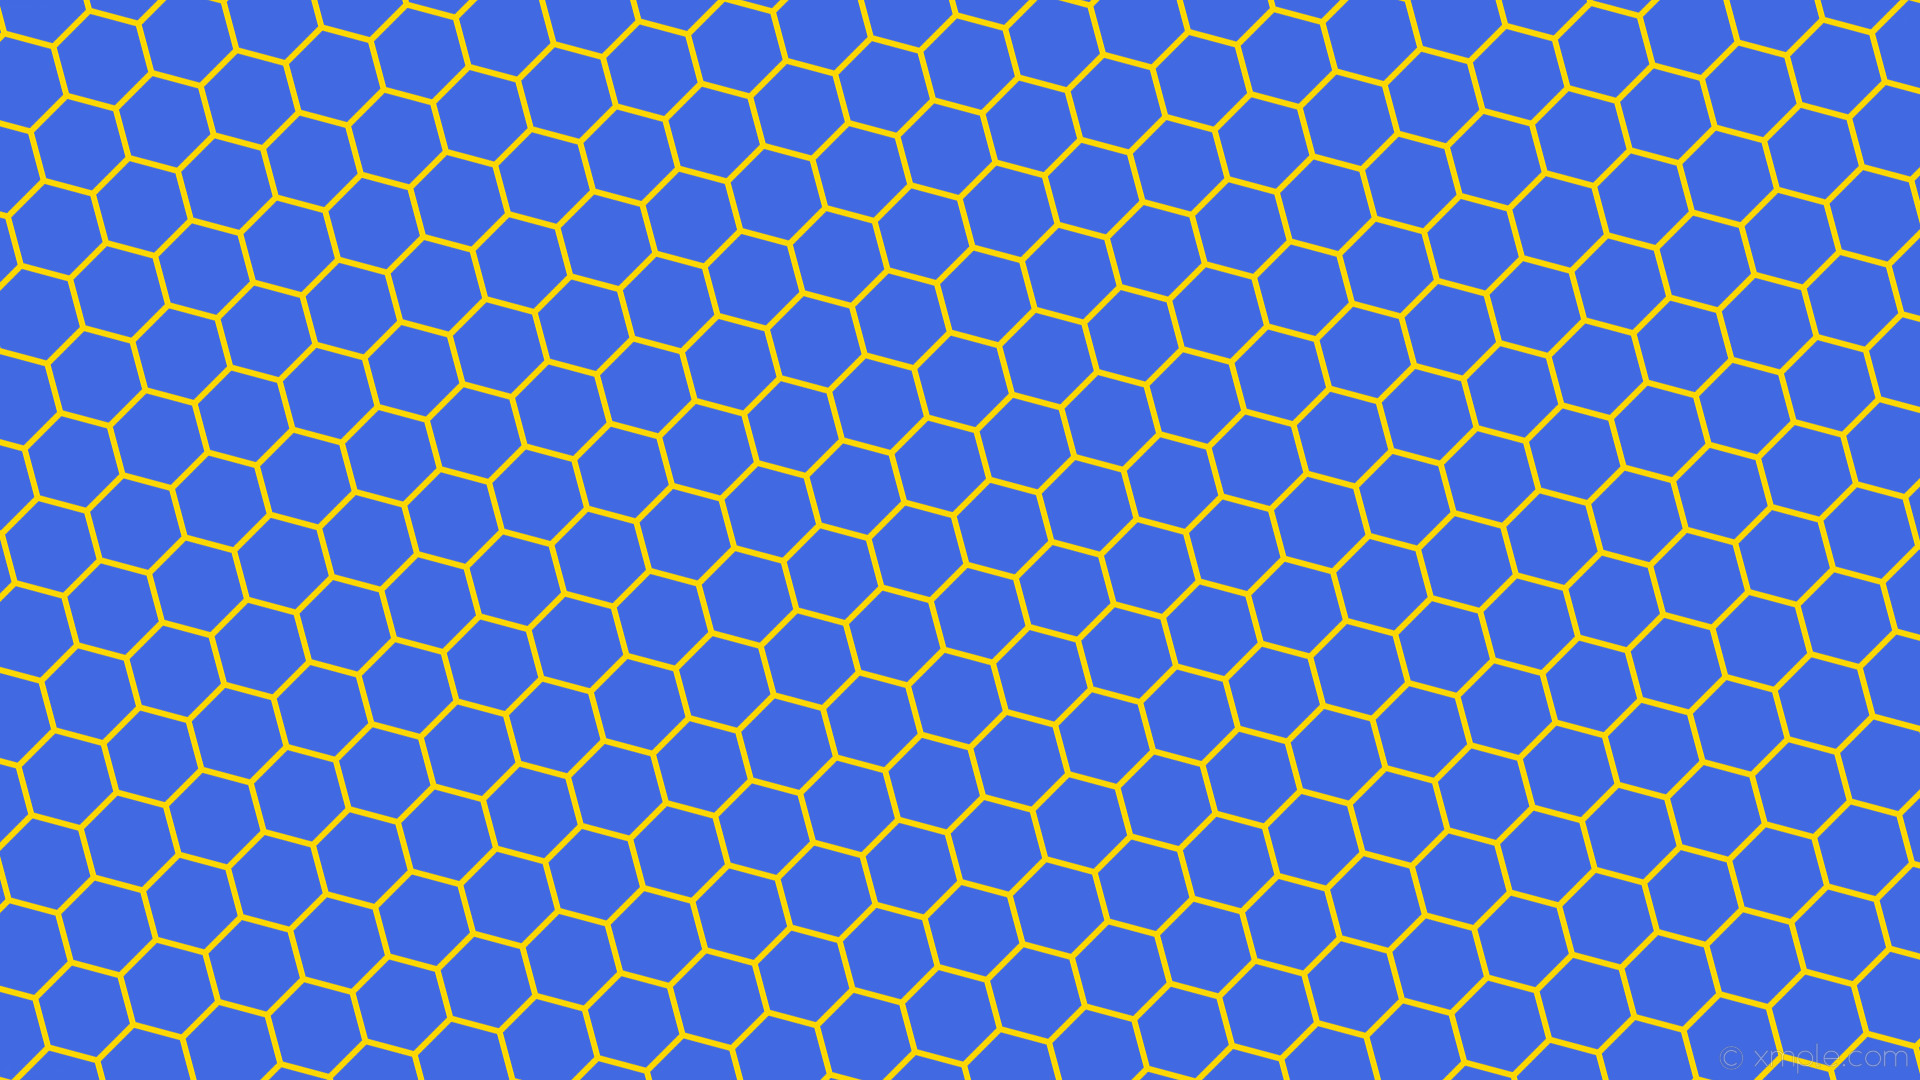 1920x1080 wallpaper yellow hexagon beehive honeycomb blue royal blue gold #4169e1  #ffd700 diagonal 15Â°